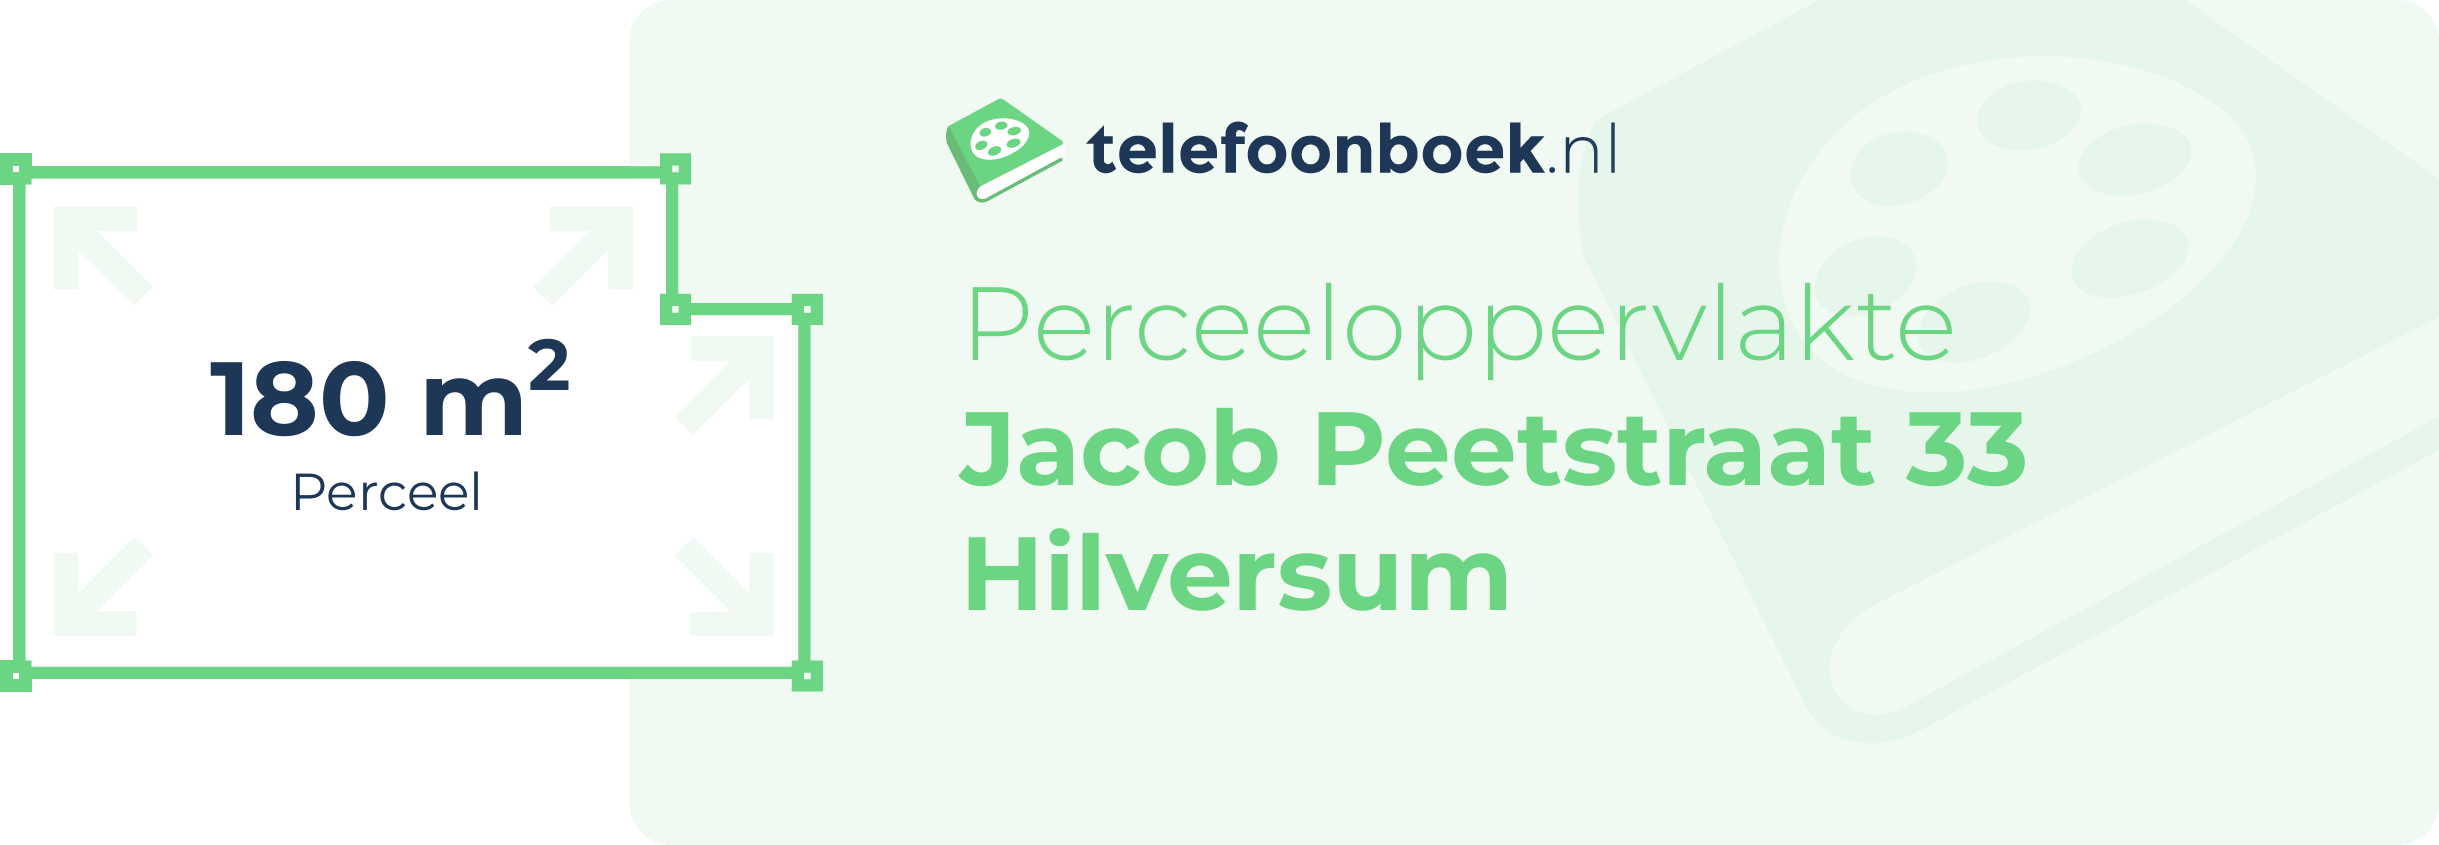 Perceeloppervlakte Jacob Peetstraat 33 Hilversum